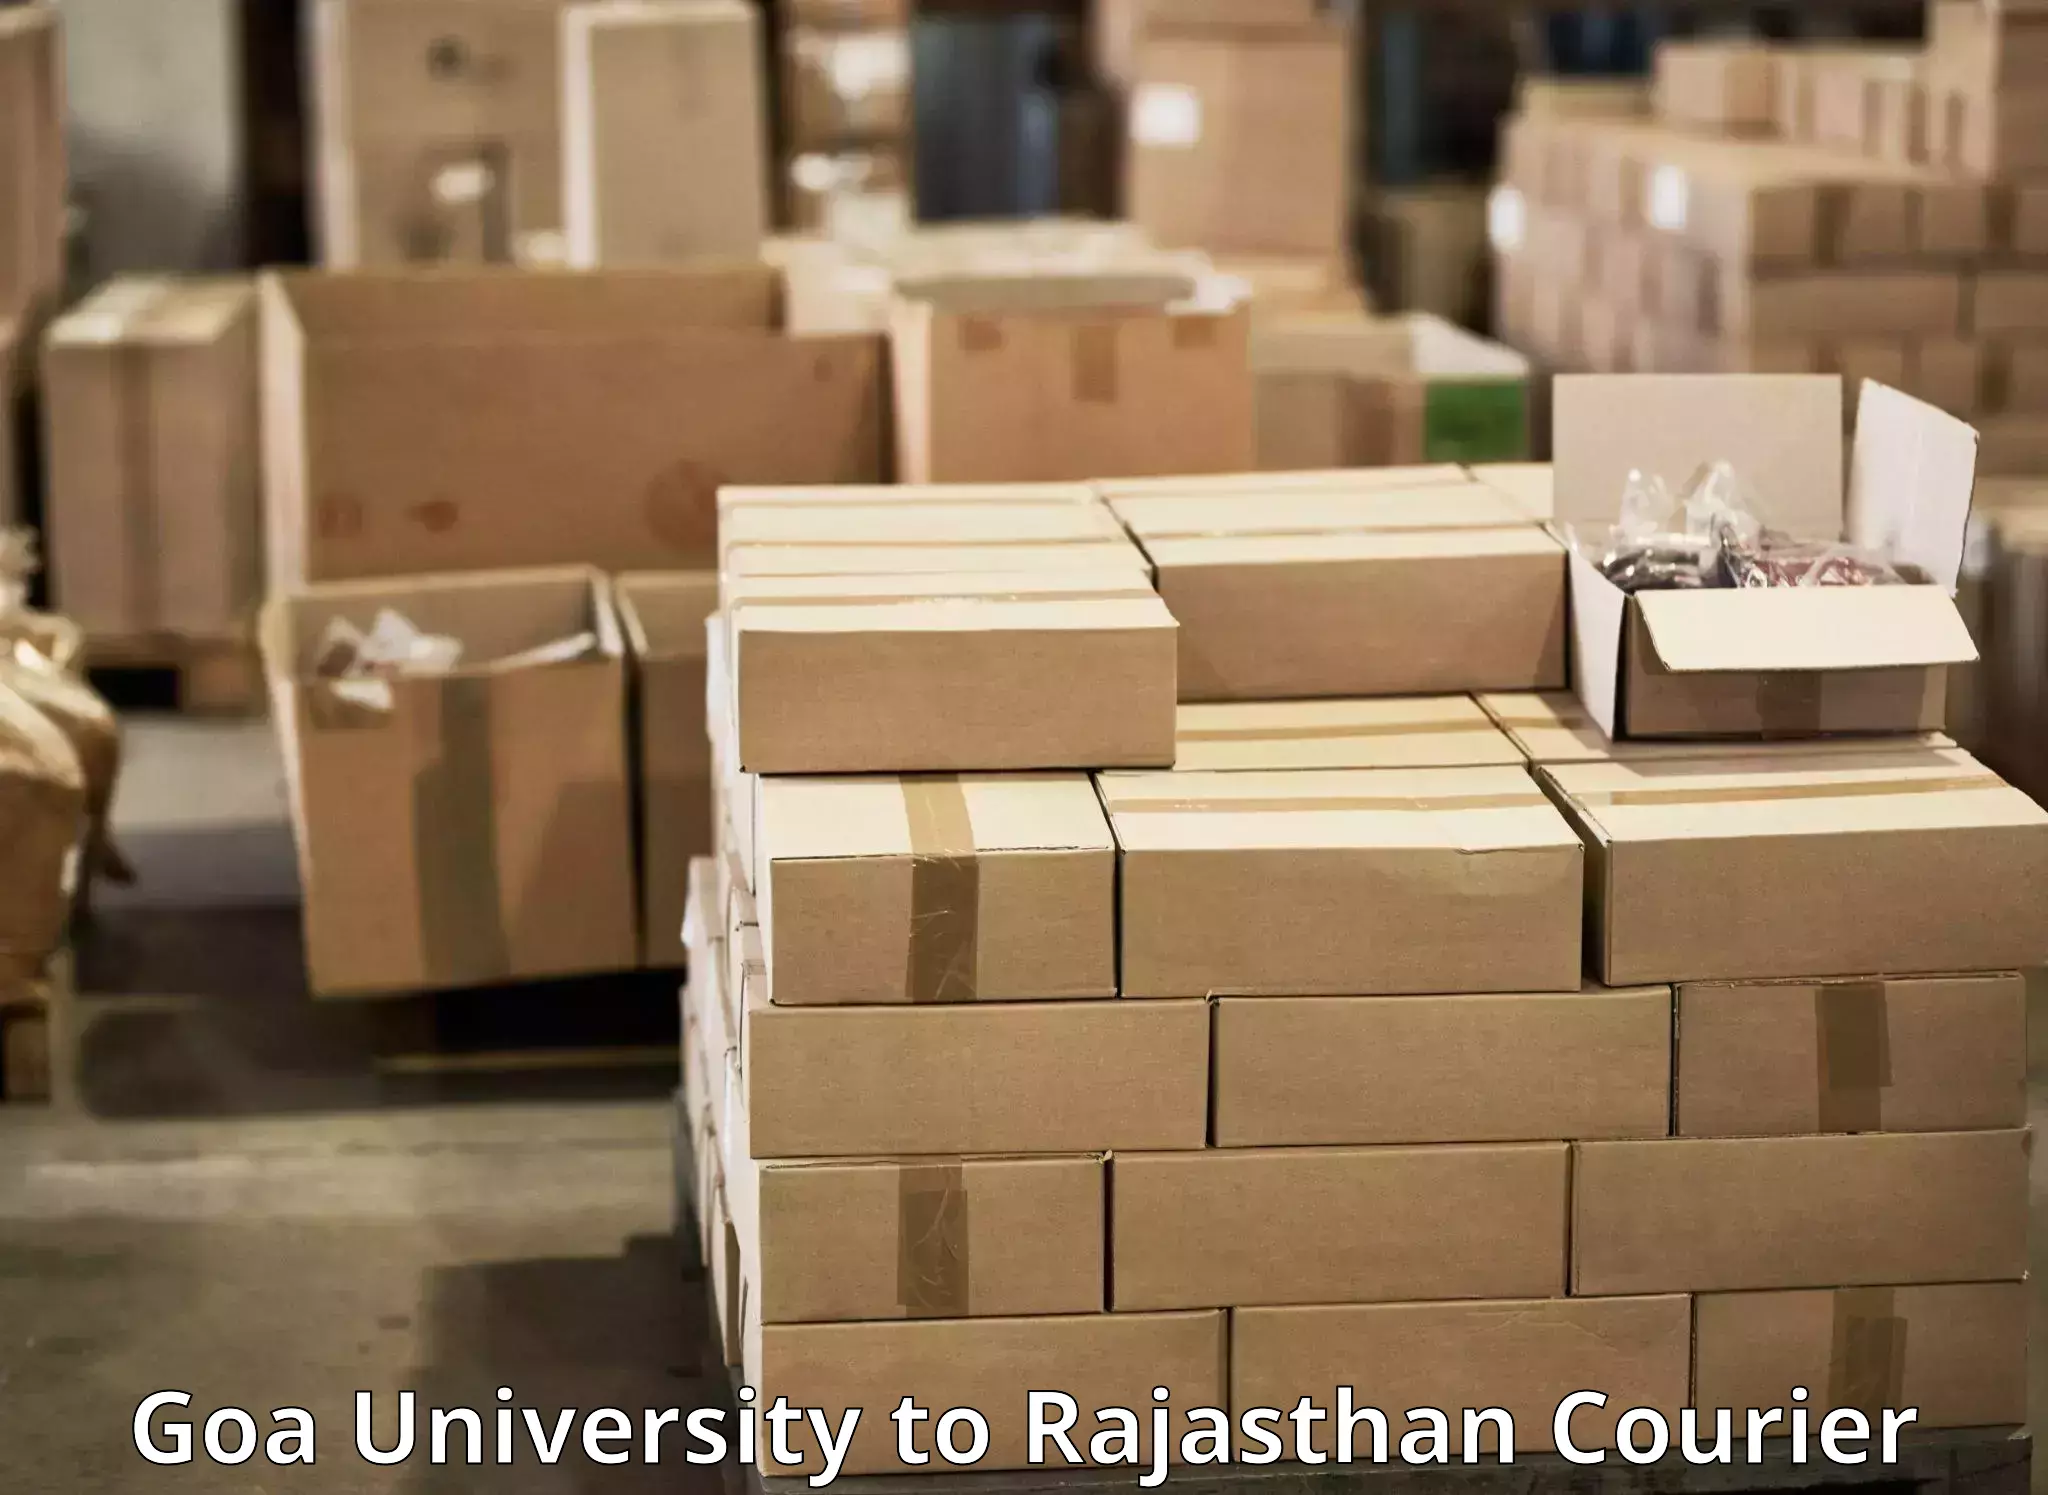 Global logistics network Goa University to Mathania